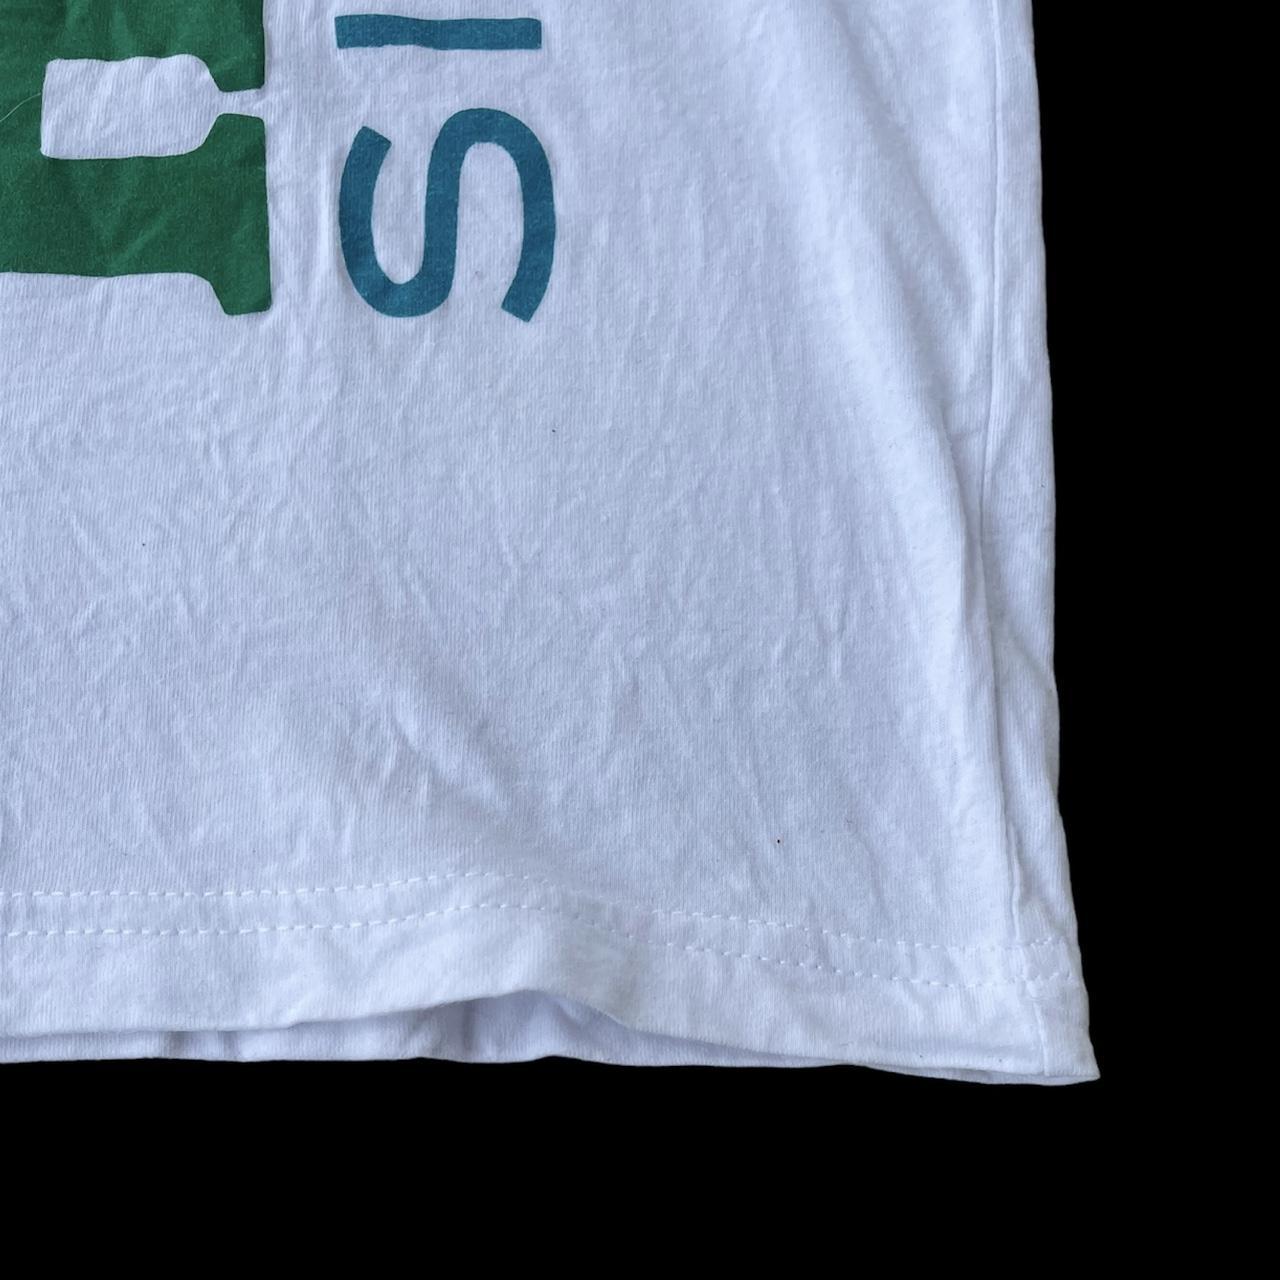 De Beers Men's White and Green T-shirt (4)